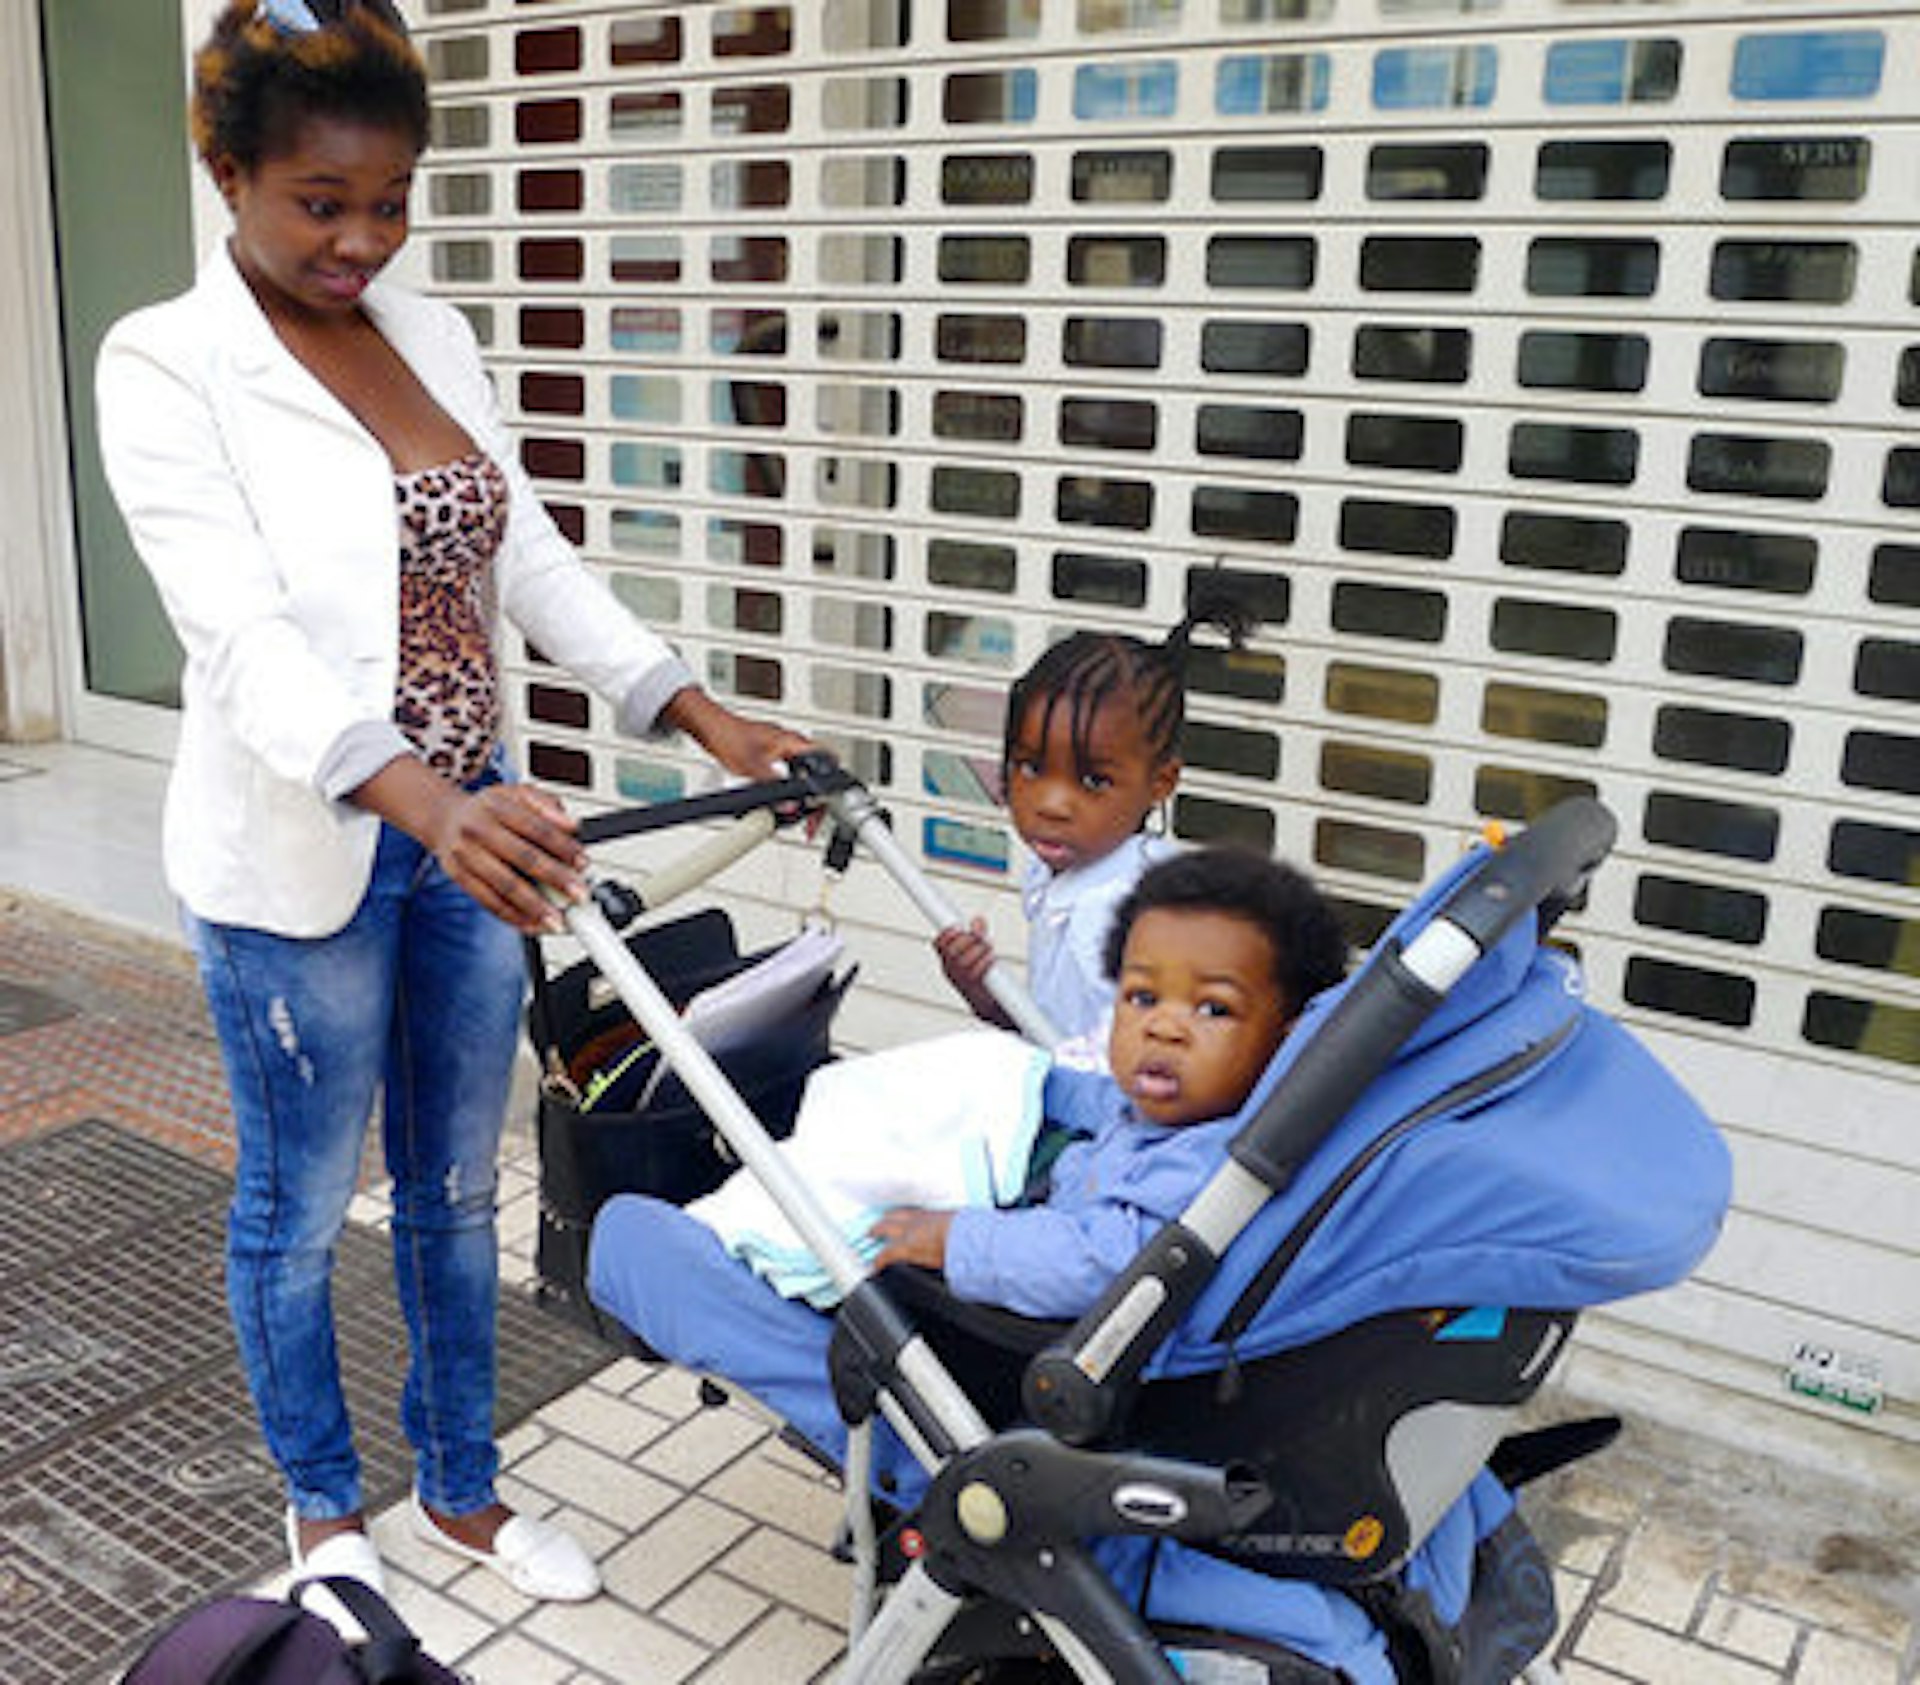 Tatiana Kanga, 25, takes her children Chantel, 3, and Antoni, 7 months, on a walk through the city of Malaga, in southern Spain. Lauren Frayer/NPR